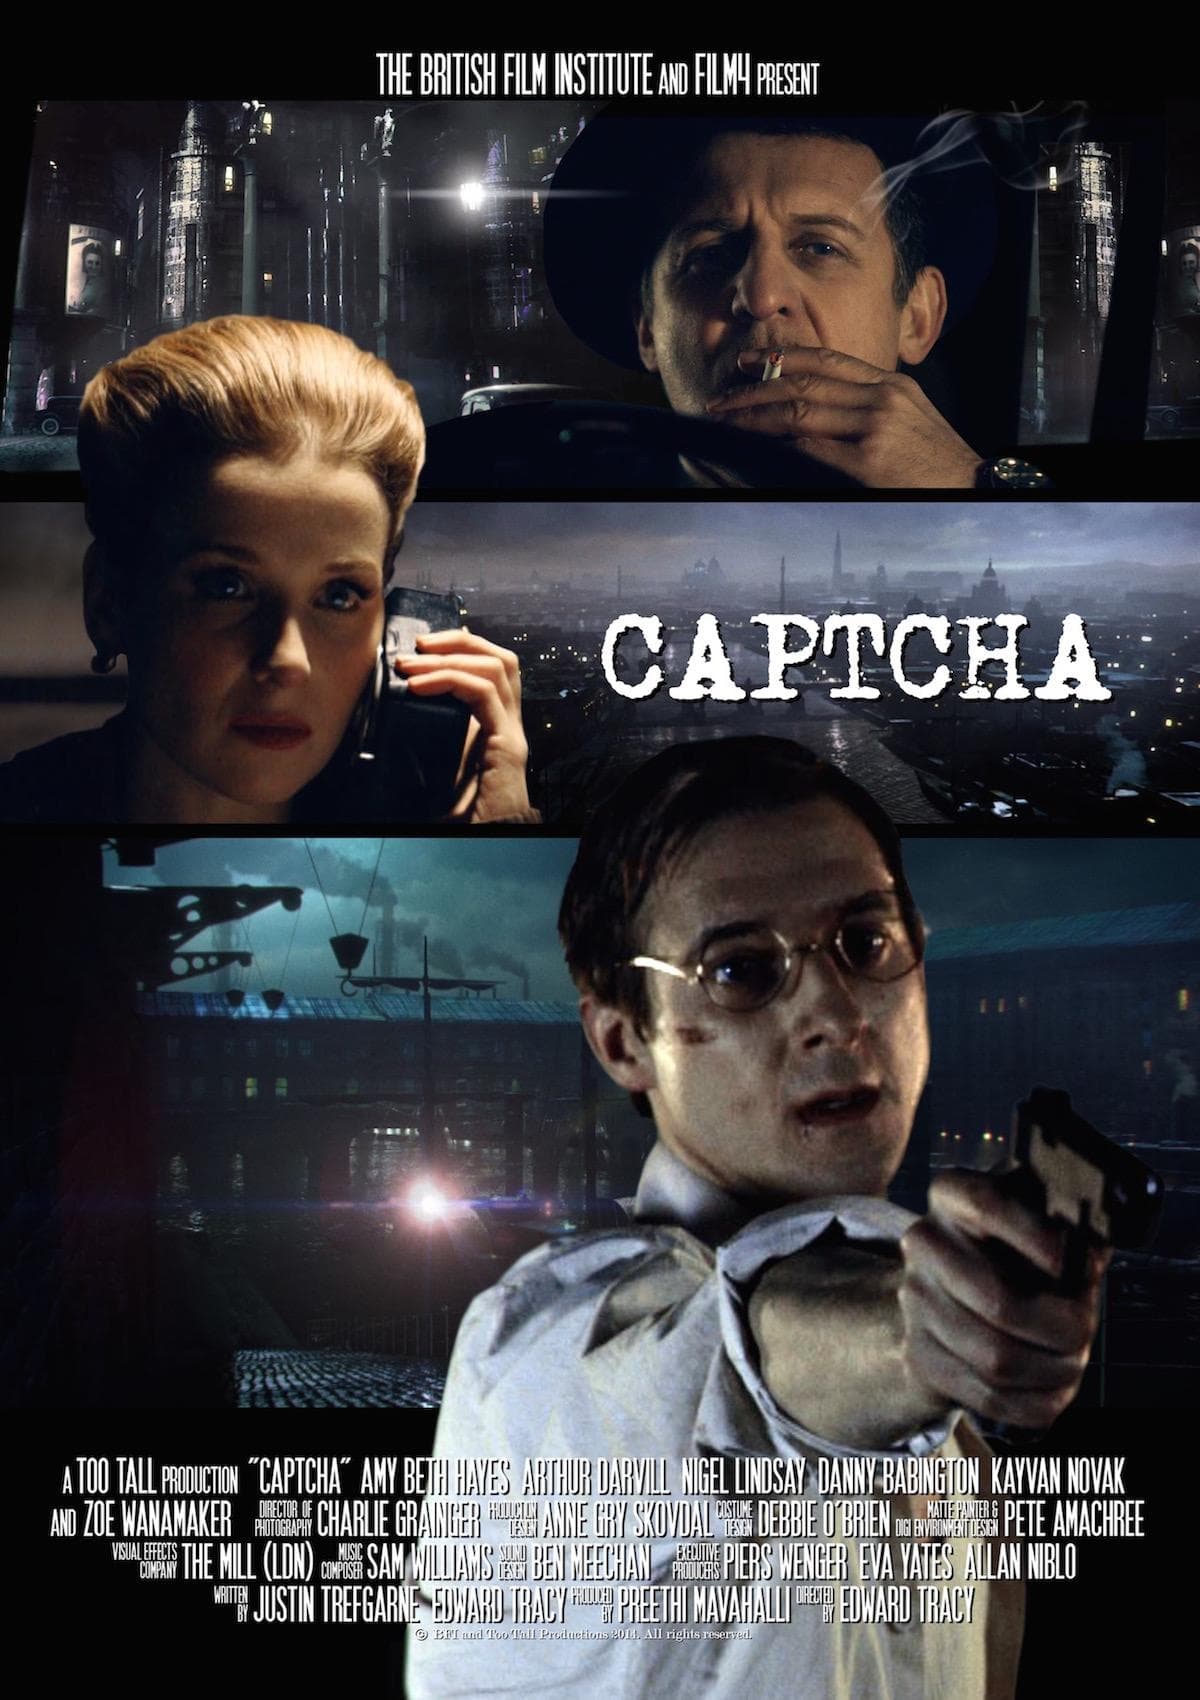 Captcha film